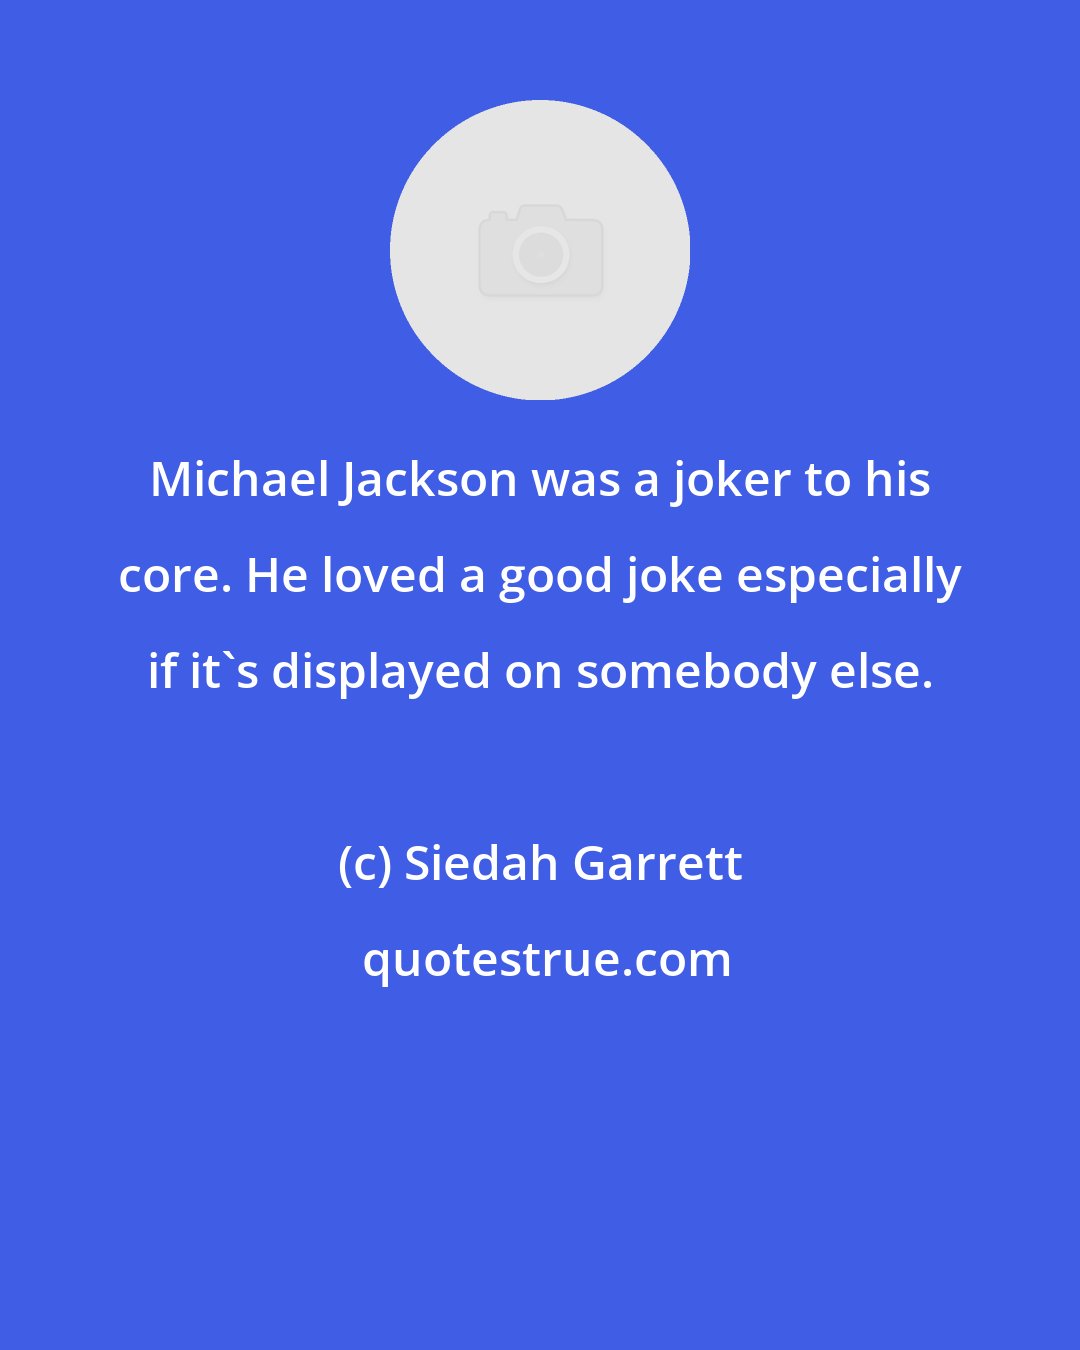 Siedah Garrett: Michael Jackson was a joker to his core. He loved a good joke especially if it's displayed on somebody else.